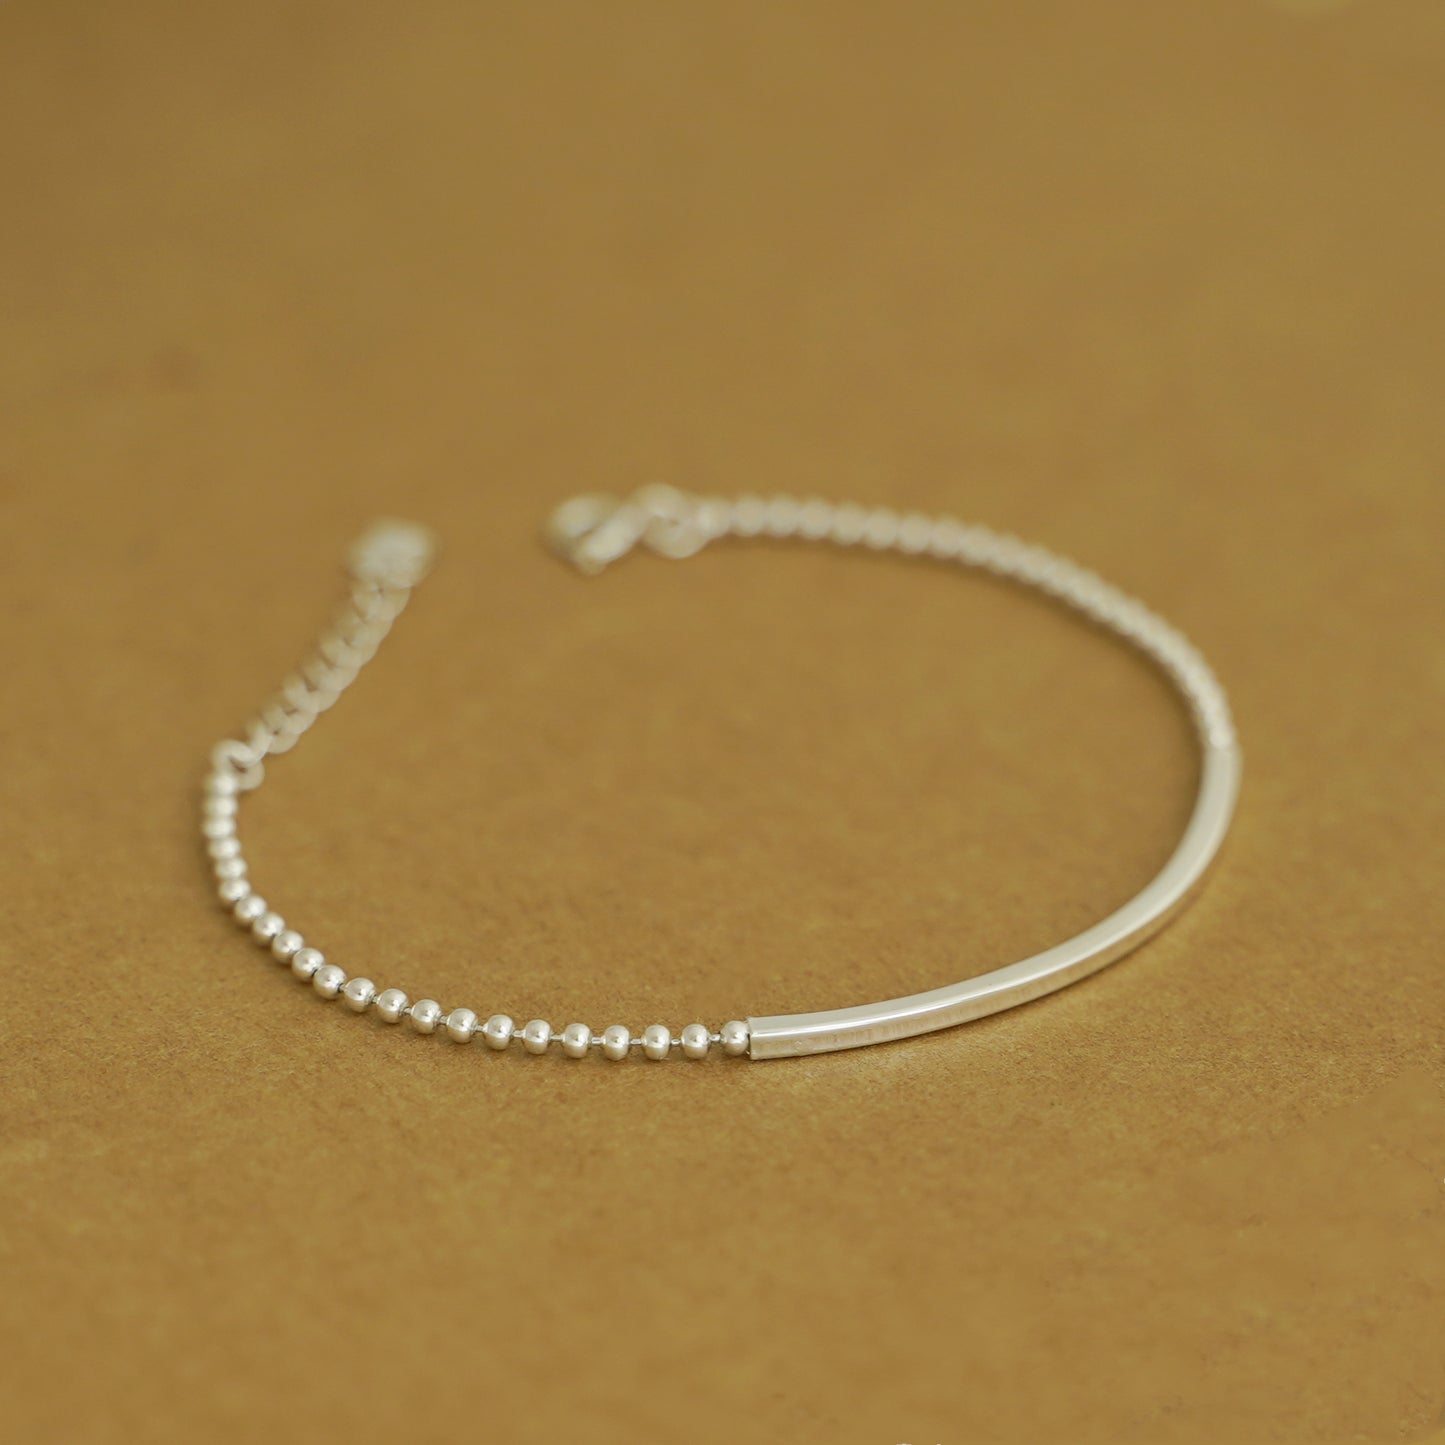 Adjustable Chain Bracelet Sterling Silver Curved Square Noodle Tube Beaded Chain Bracelet 16.5 - 19.5cm - sugarkittenlondon